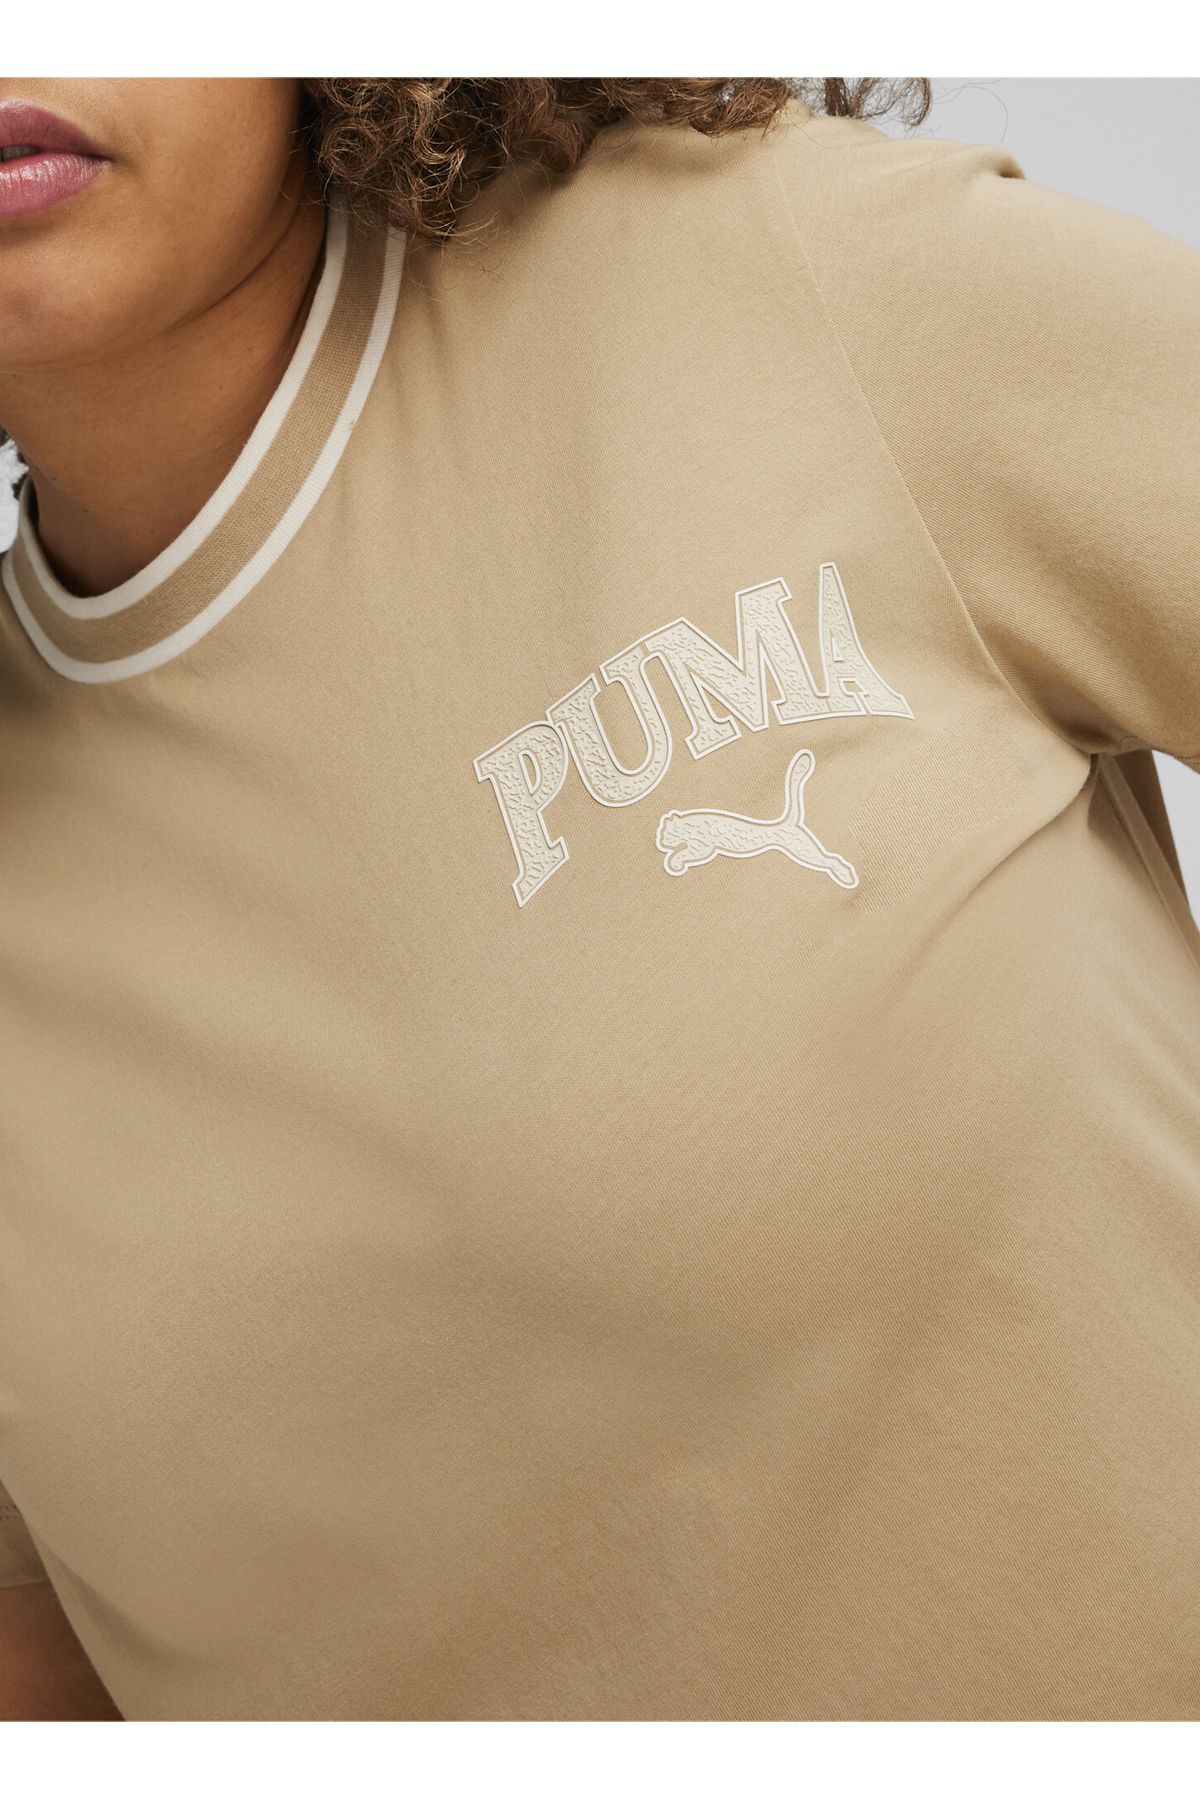 Puma Puma تی‌شرت زنانه سایز L با الگوی پوما